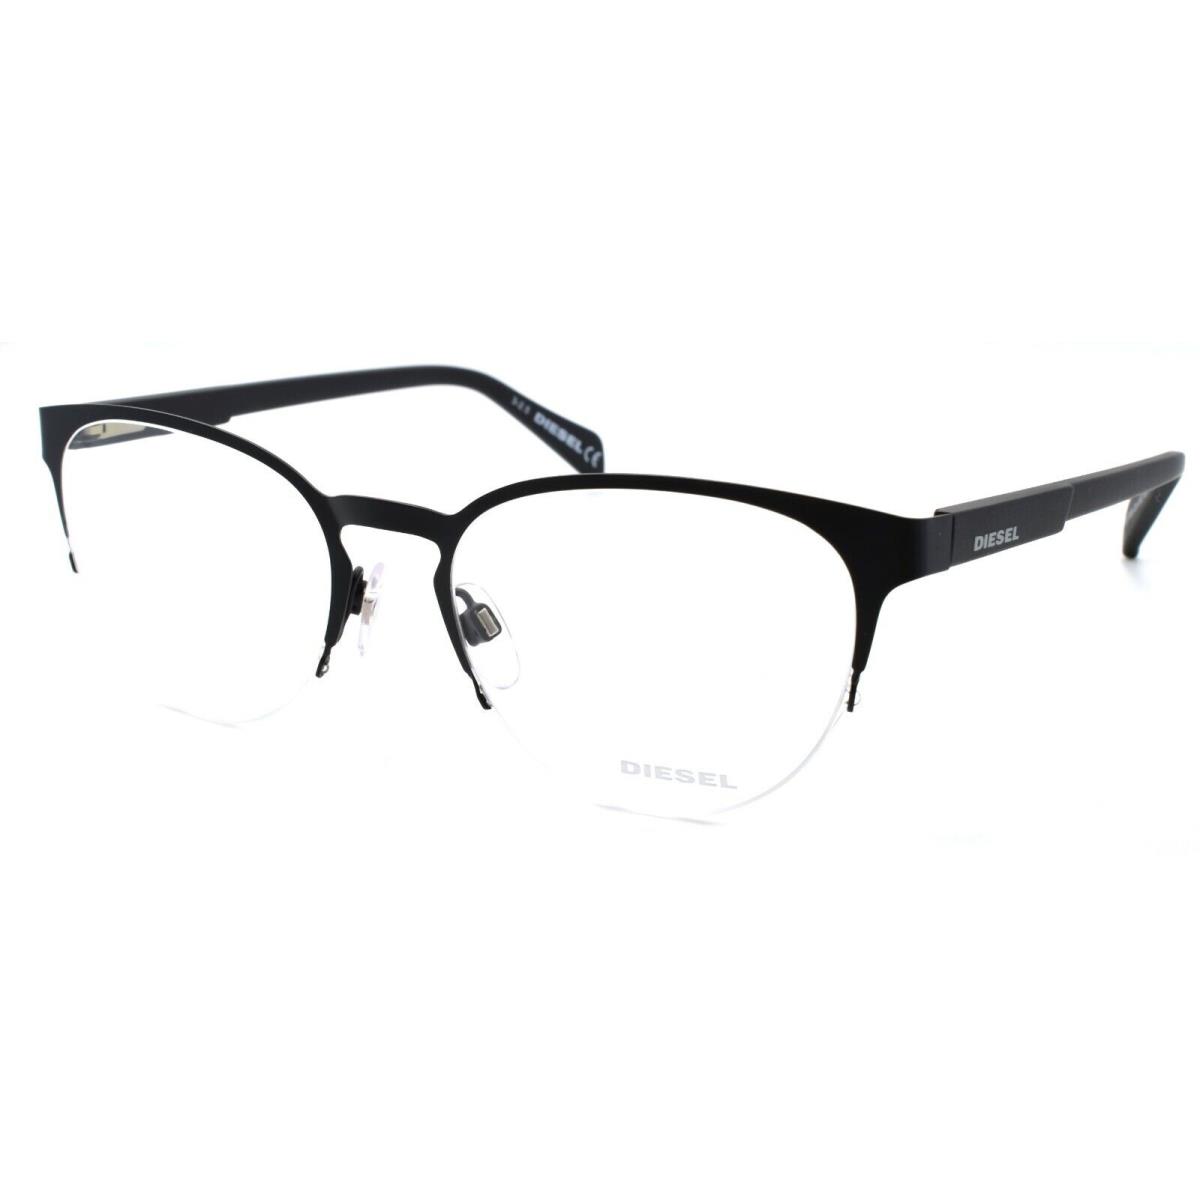 Diesel DL5158 002 Unisex Eyeglasses Frames Half Rim 52-19-145 Matte Black